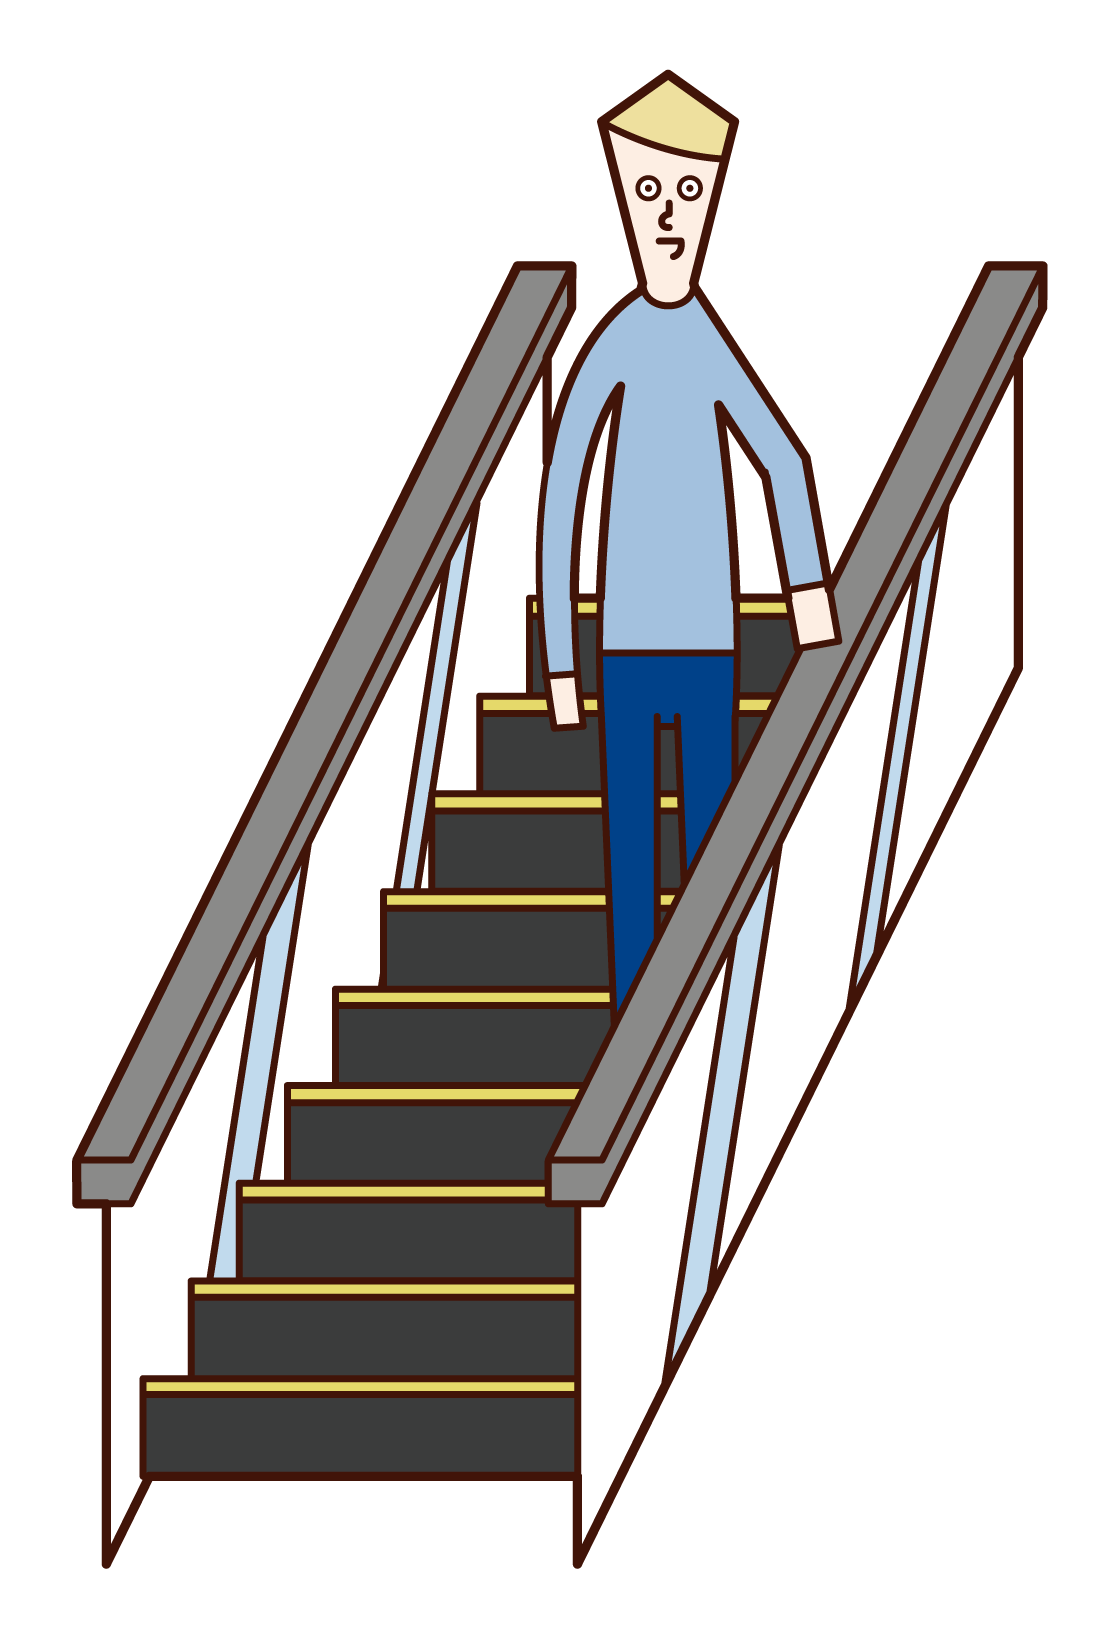 Illustration of a man riding an escalator